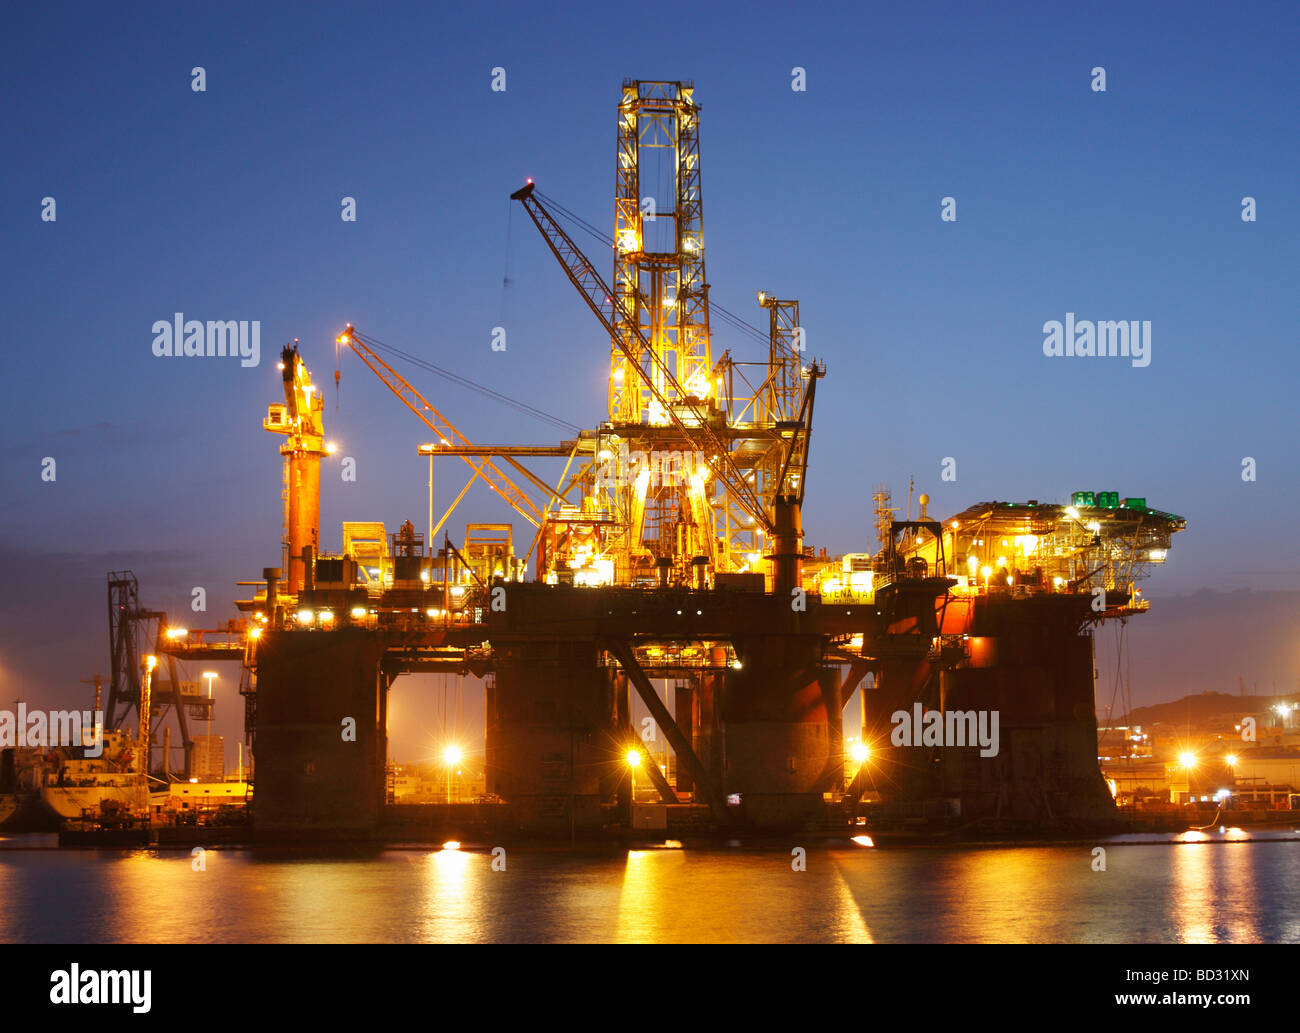 Drilling platform at night Stock Photo